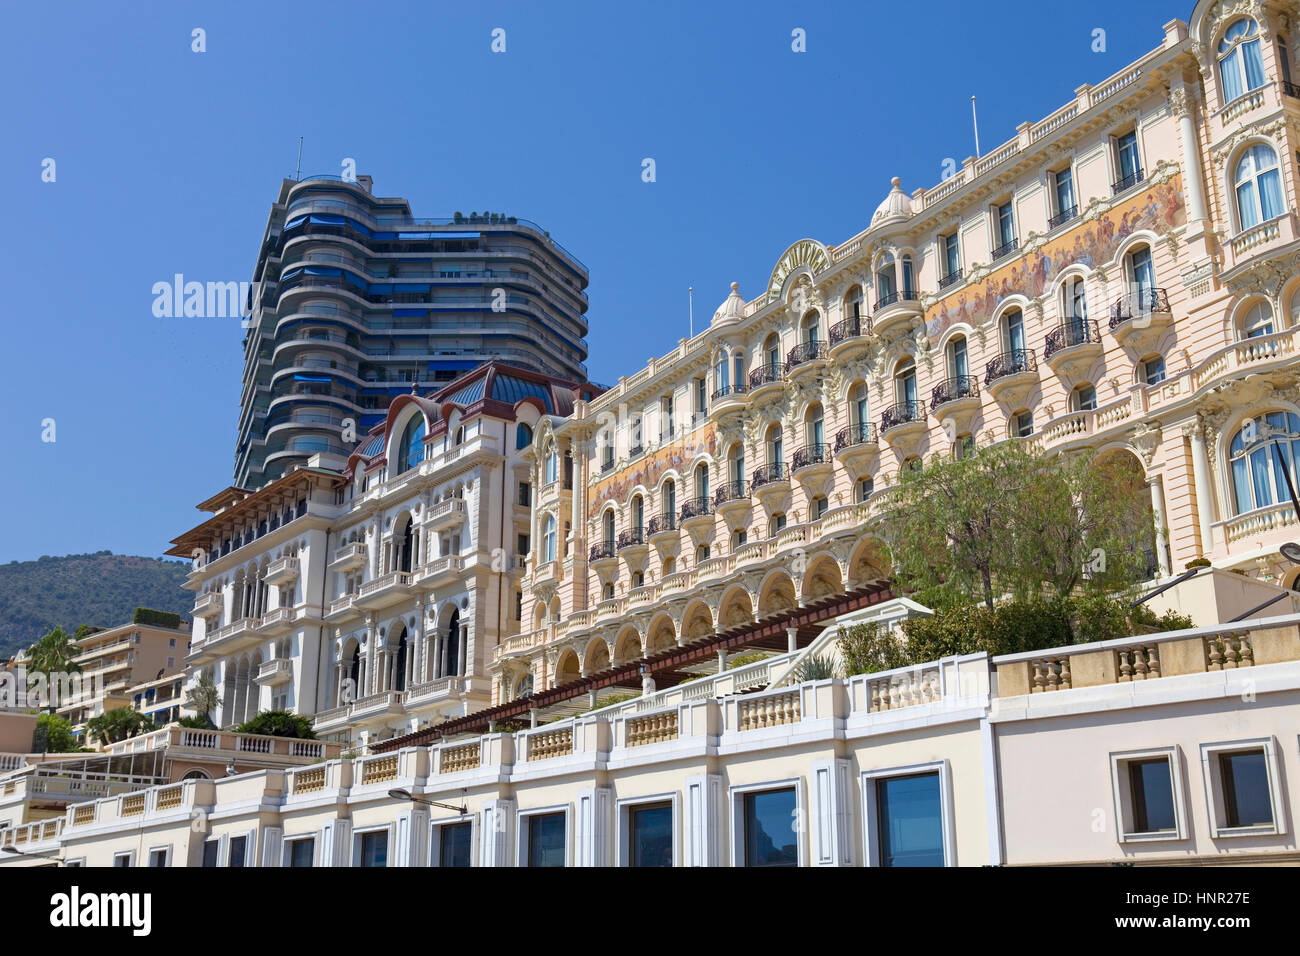 MONTE CARLO, MONACO - AUGUST 17, 2012: Luxury apartments in Monte Carlo, Monaco major financial and touristic landmark in Europe Stock Photo